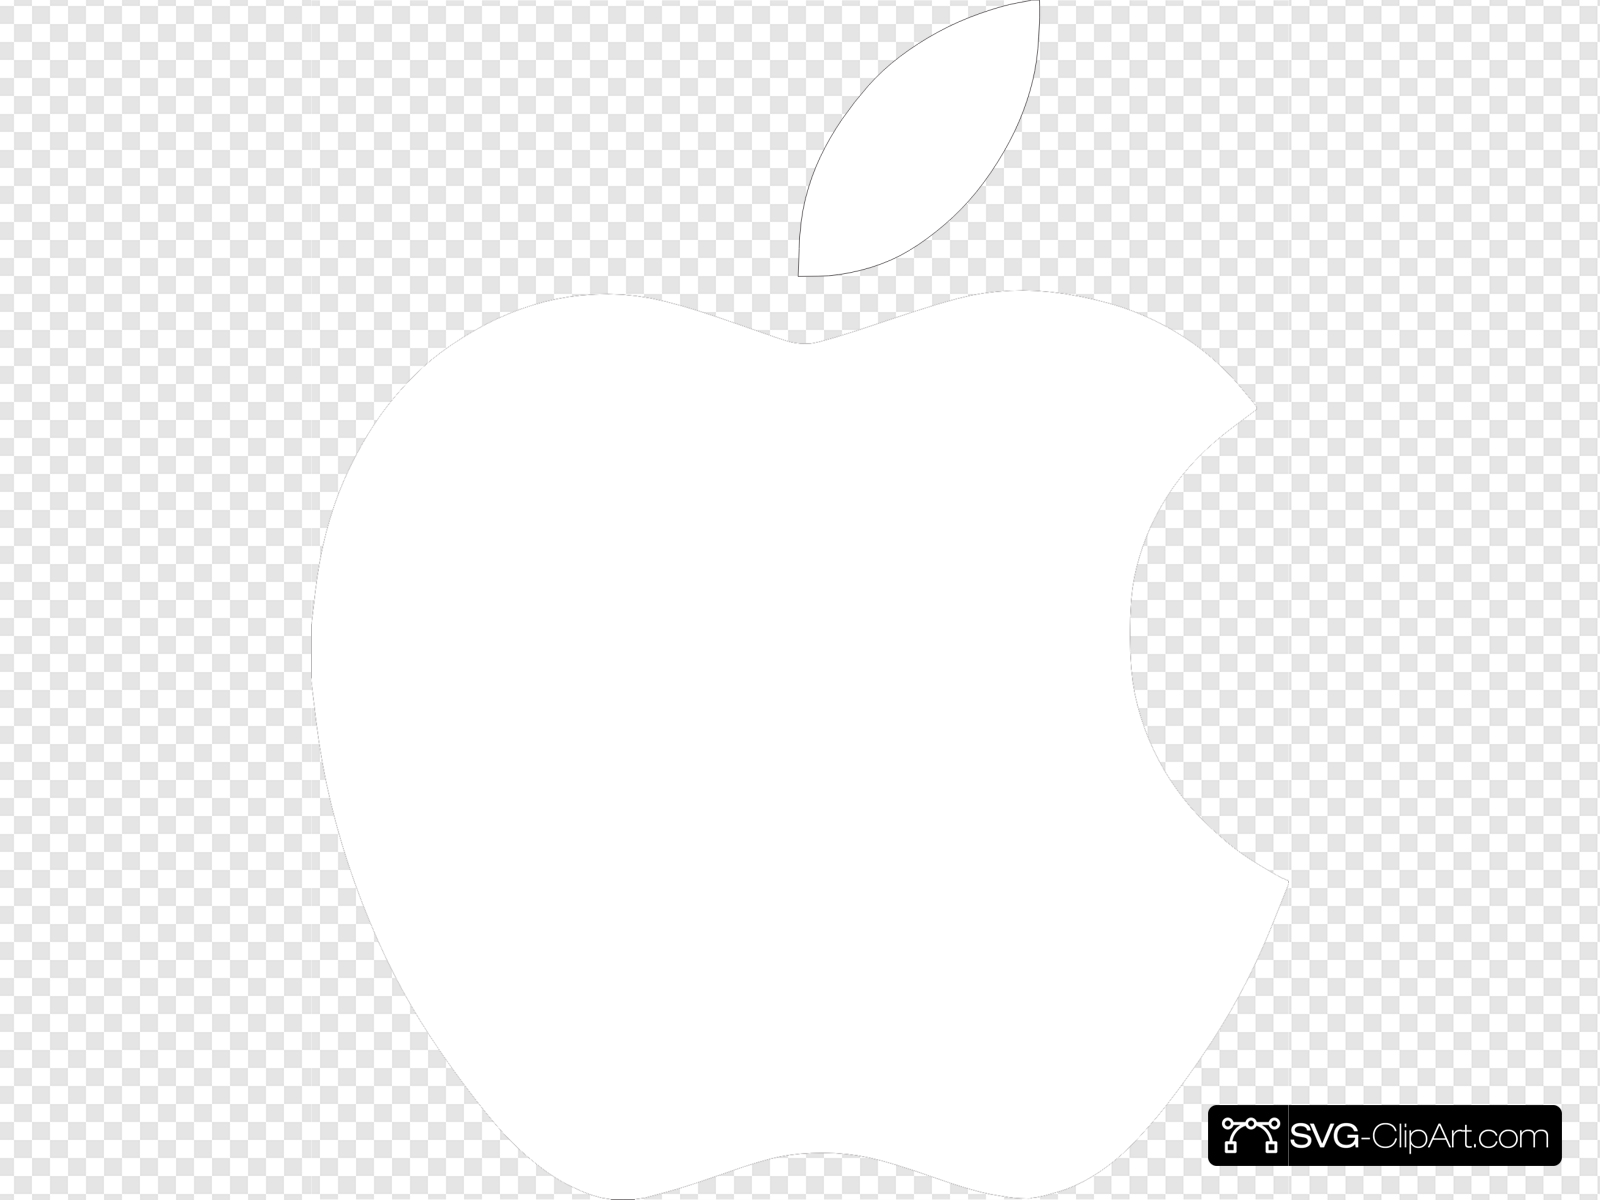 Apple Logo White Clip art, Icon and SVG.